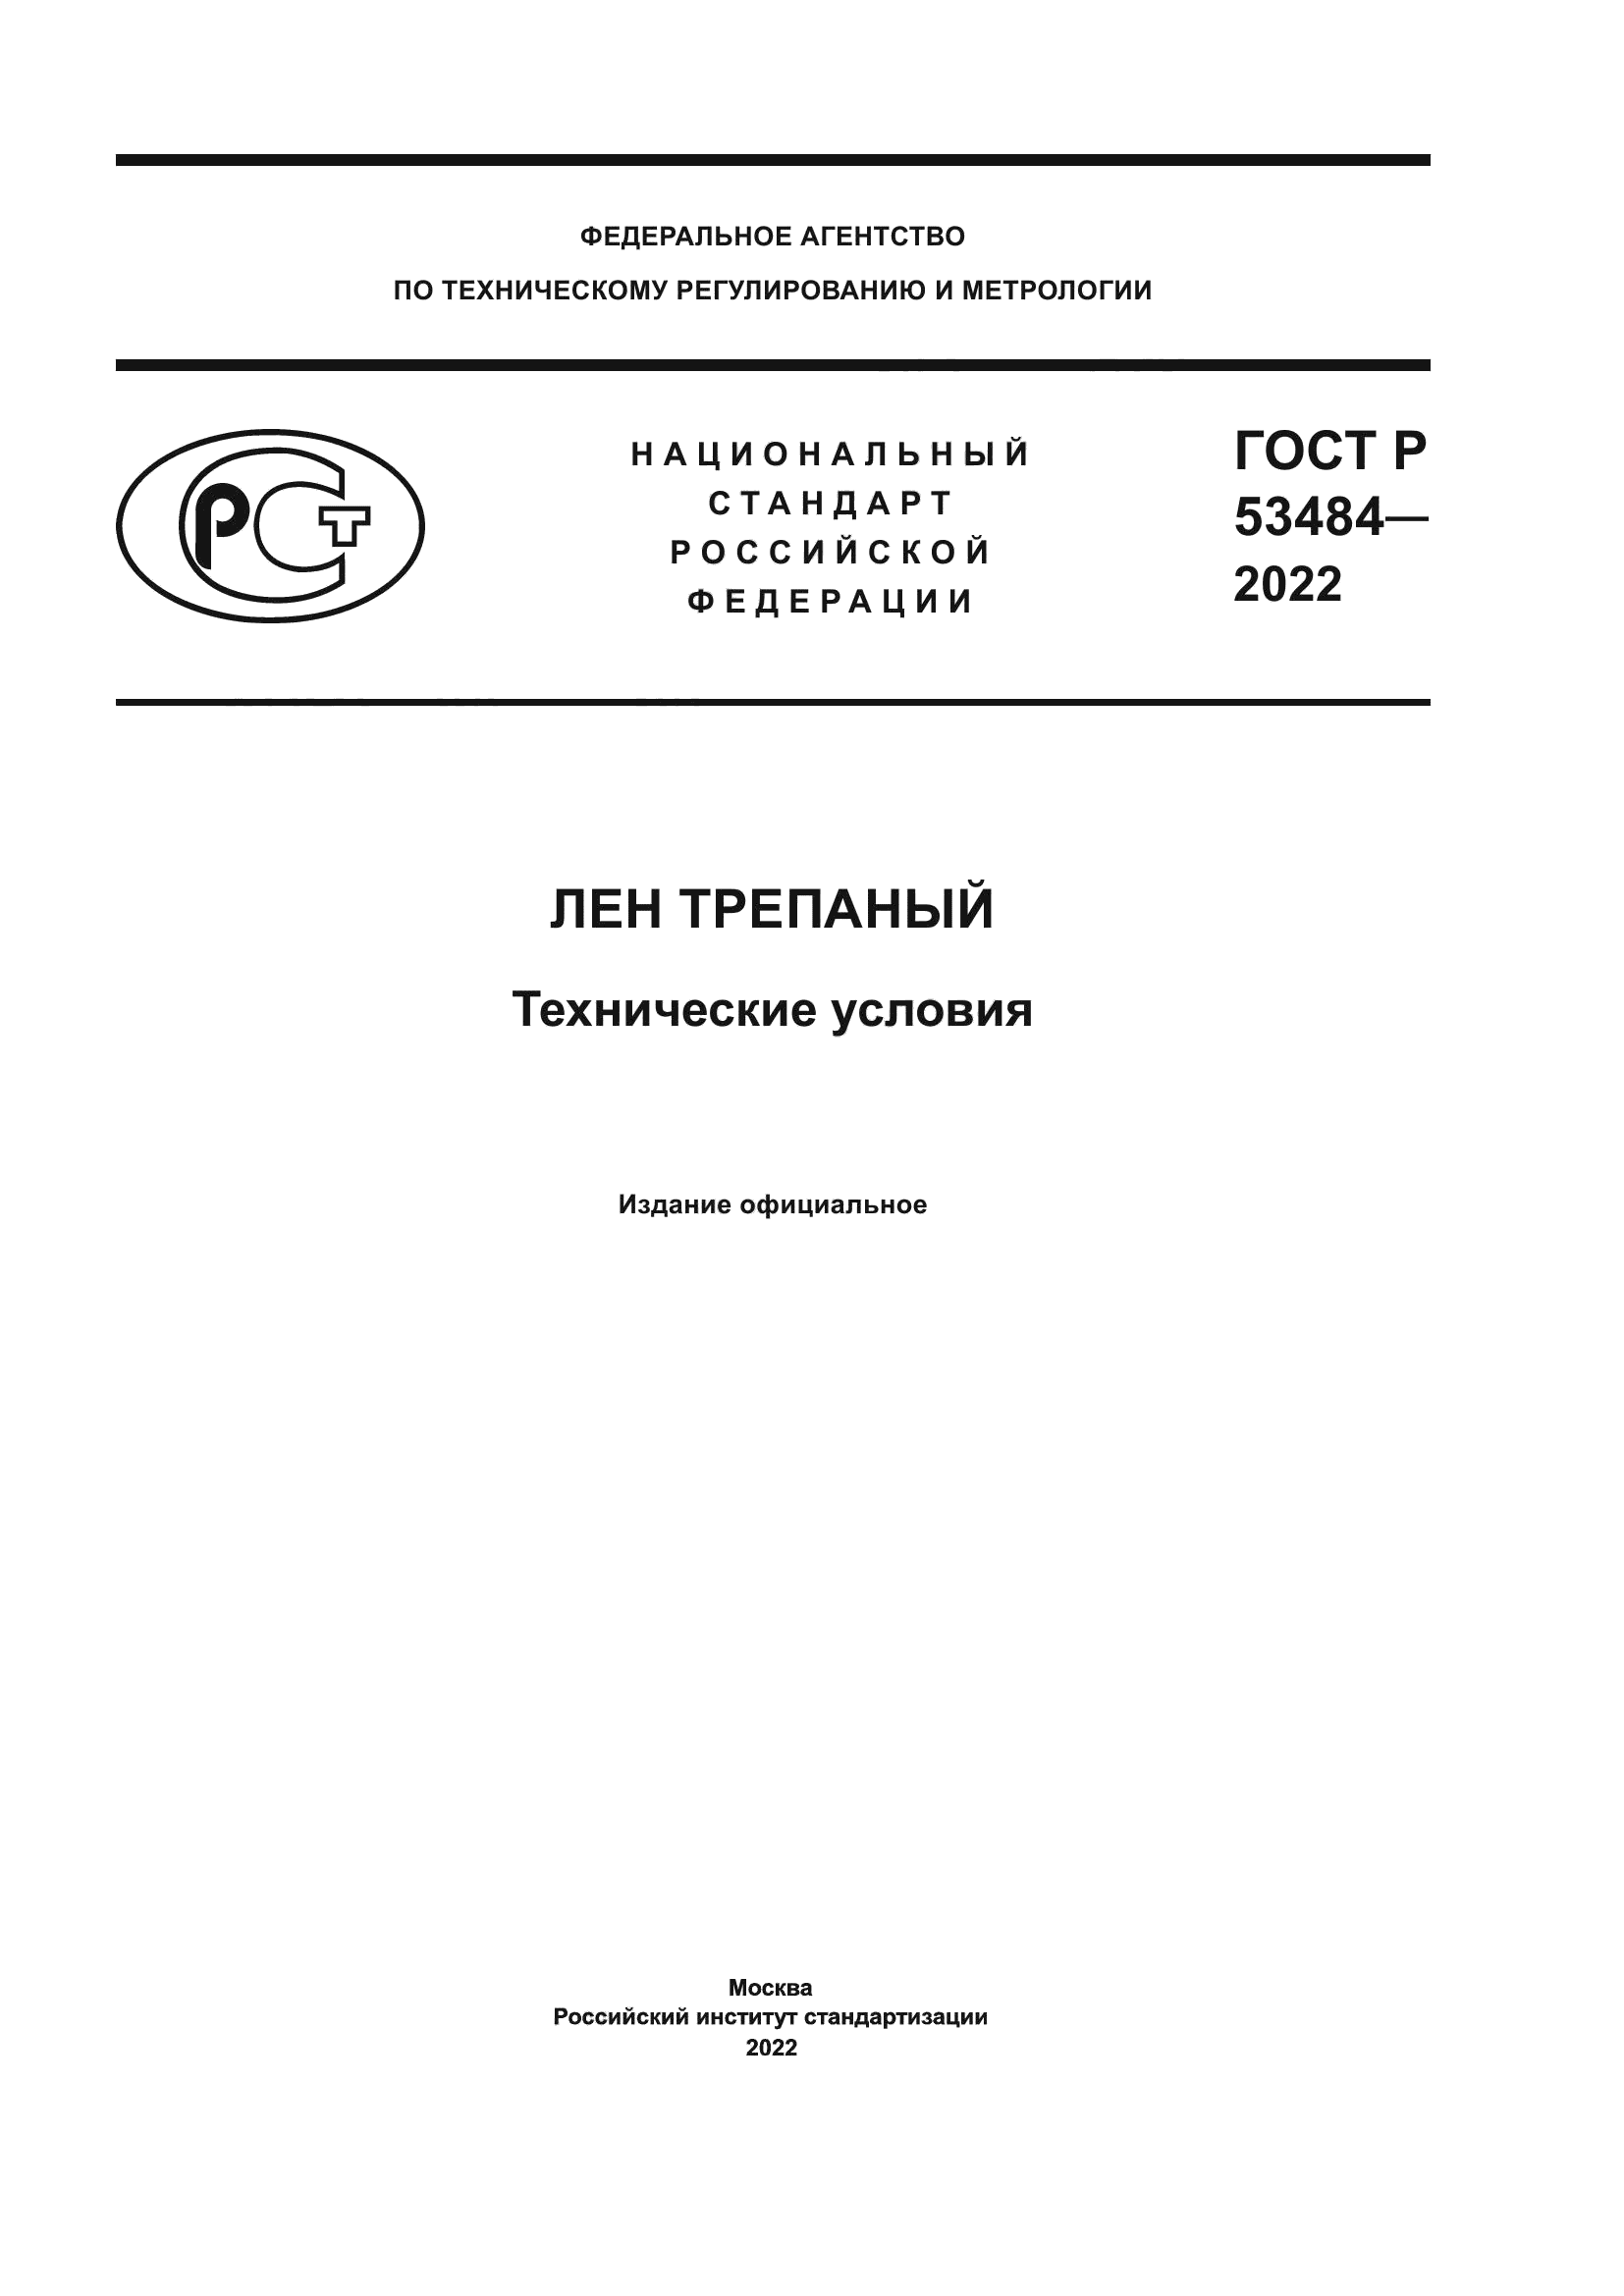 ГОСТ Р 53484-2022